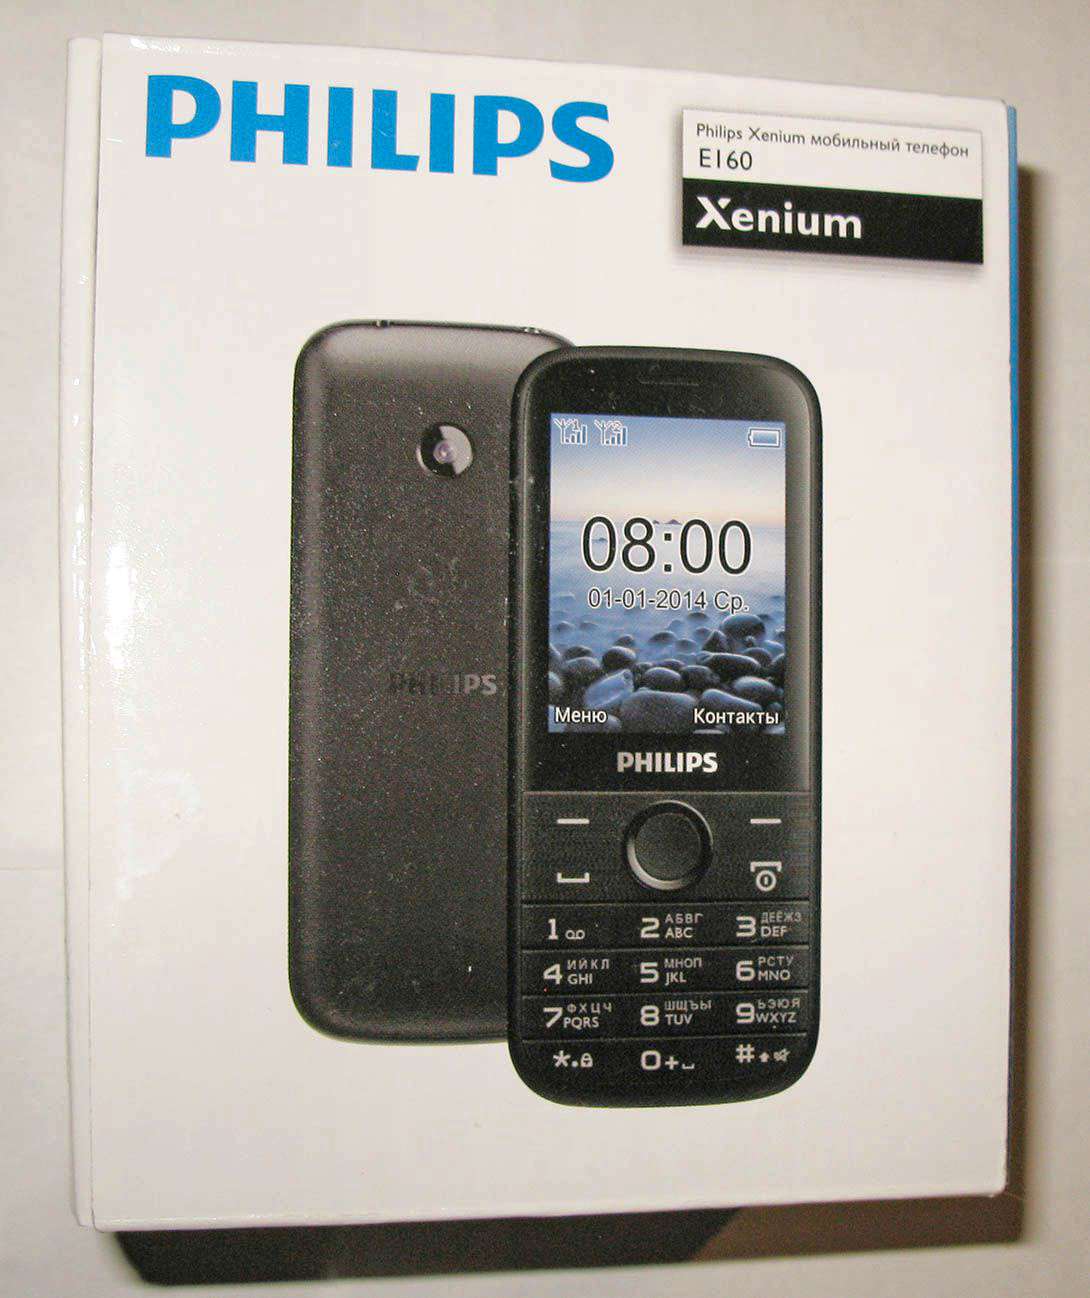 Xenium e590 купить. Philips Xenium e160. Телефон Philips Xenium e160. Philips Xenium e2601. Philips Xenium e590.